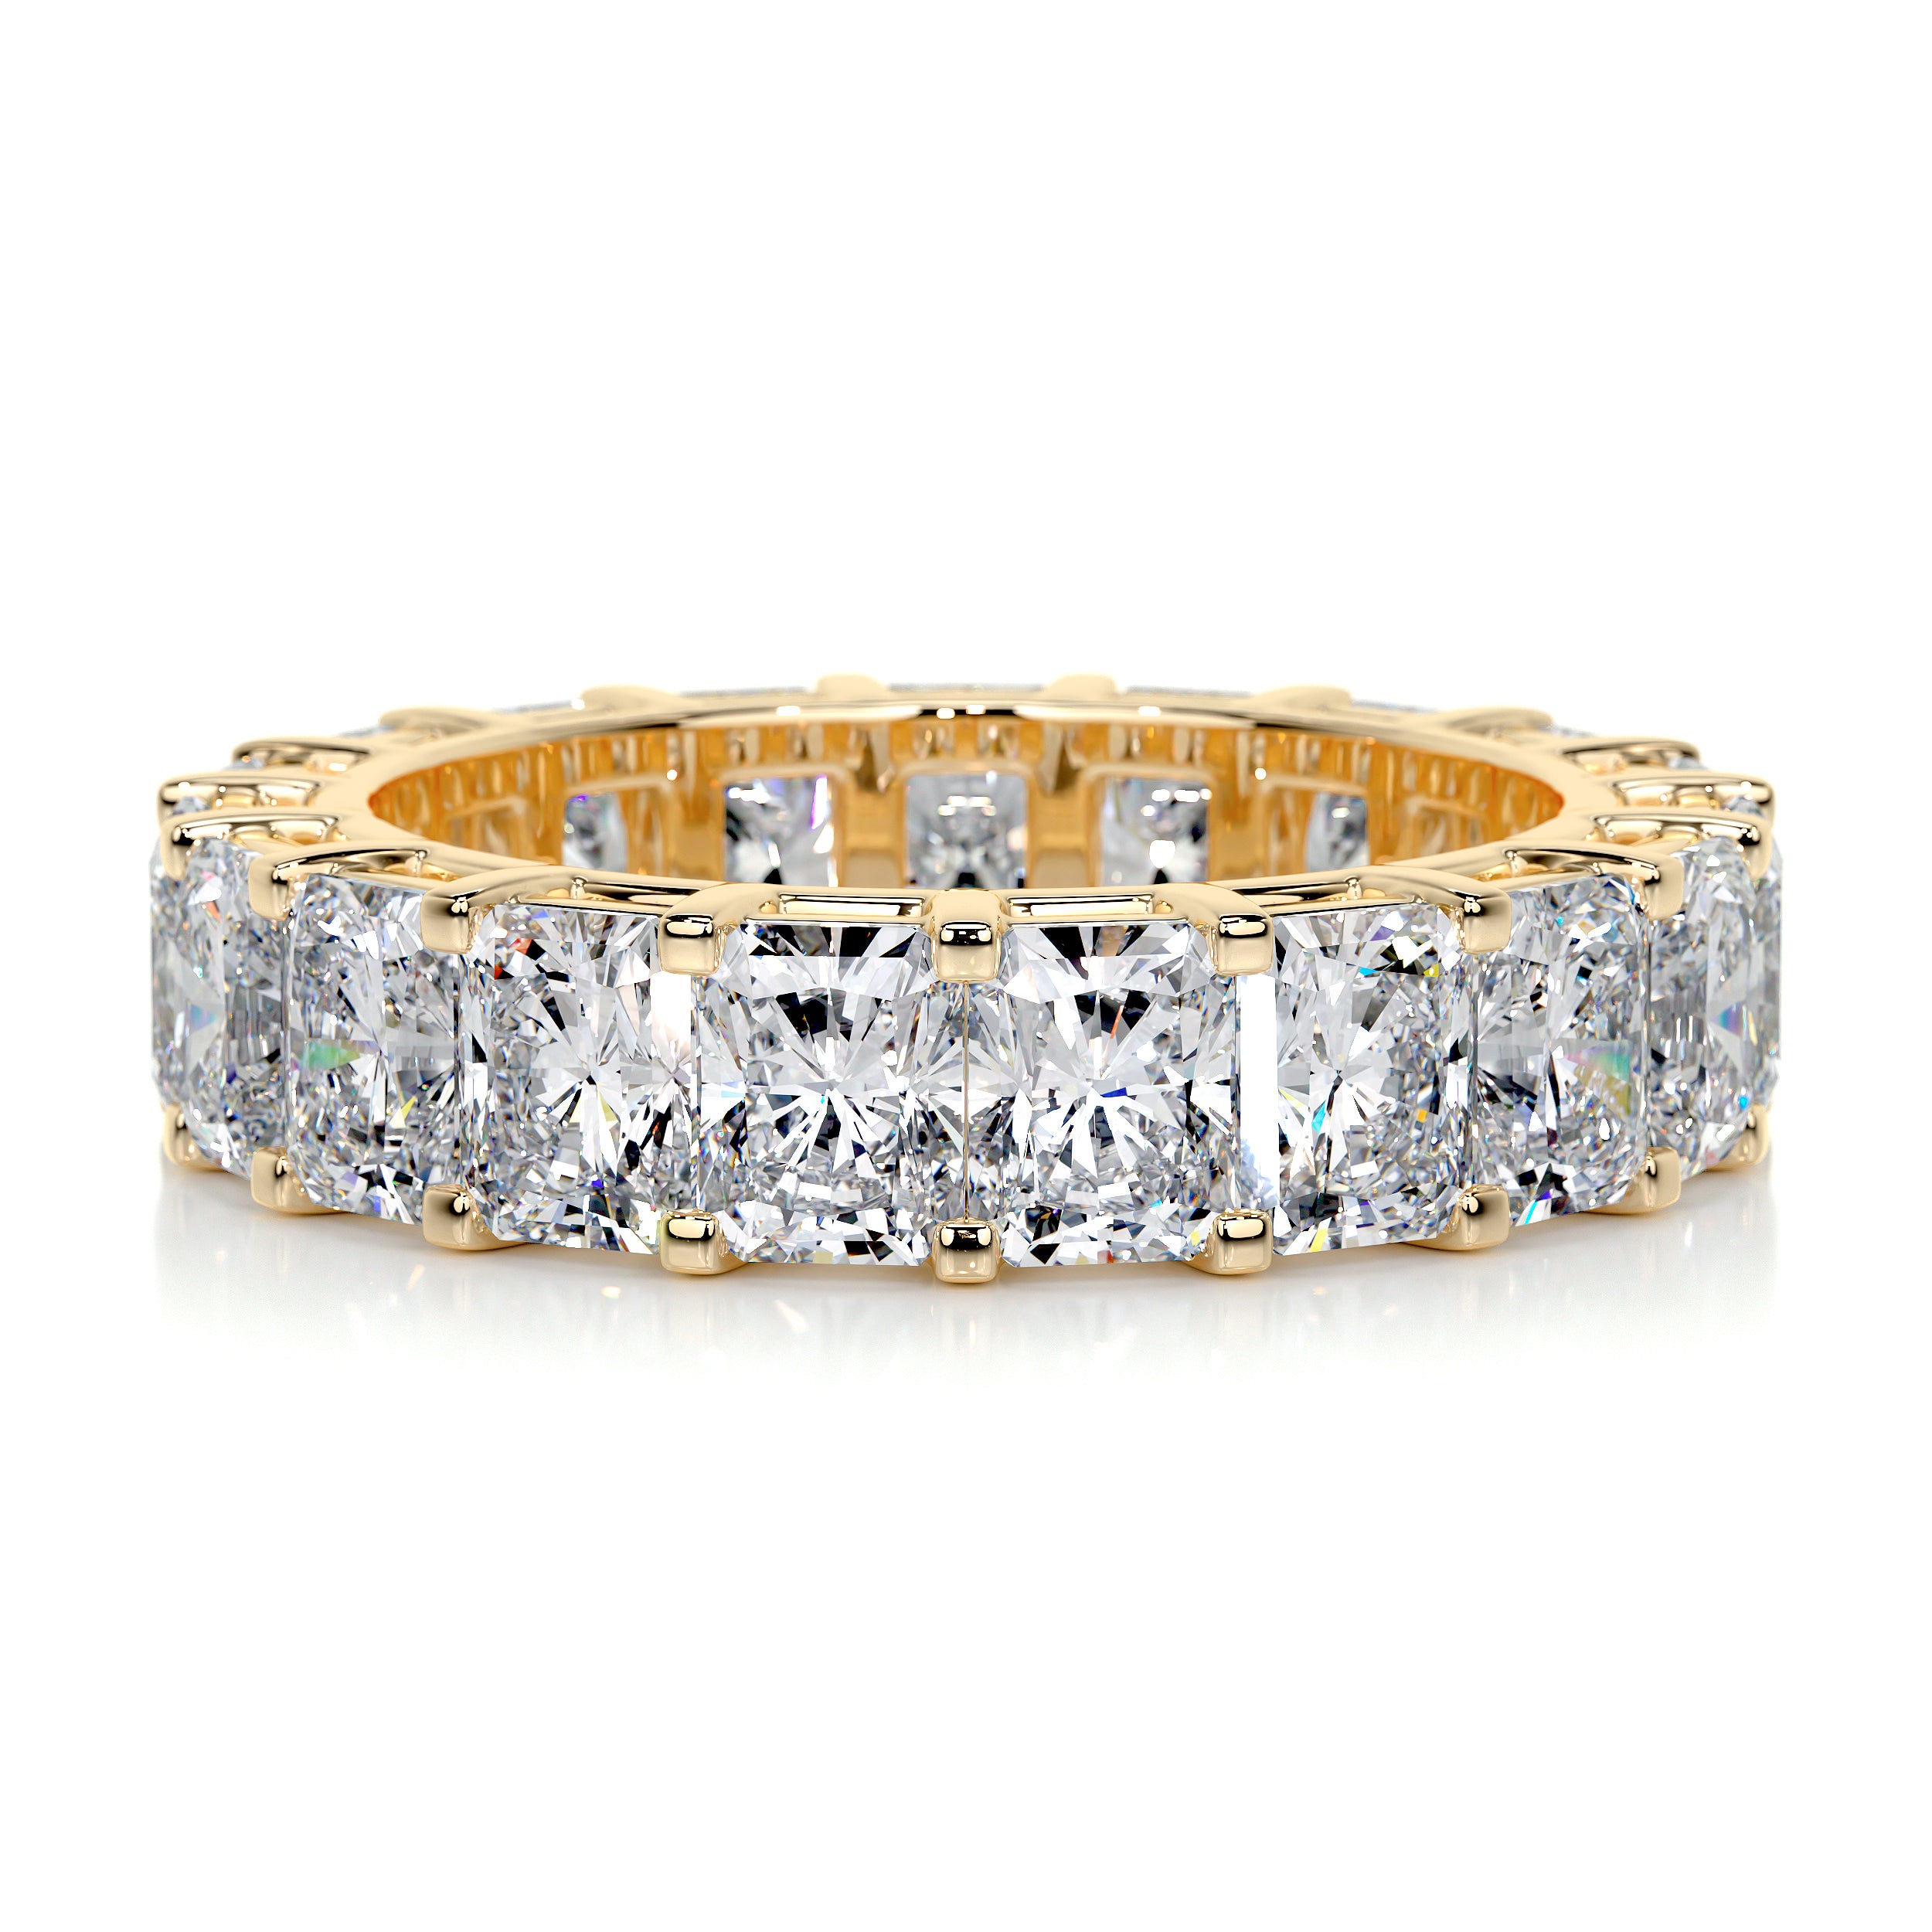 Andi Eternity Wedding Ring - 18K Yellow Gold